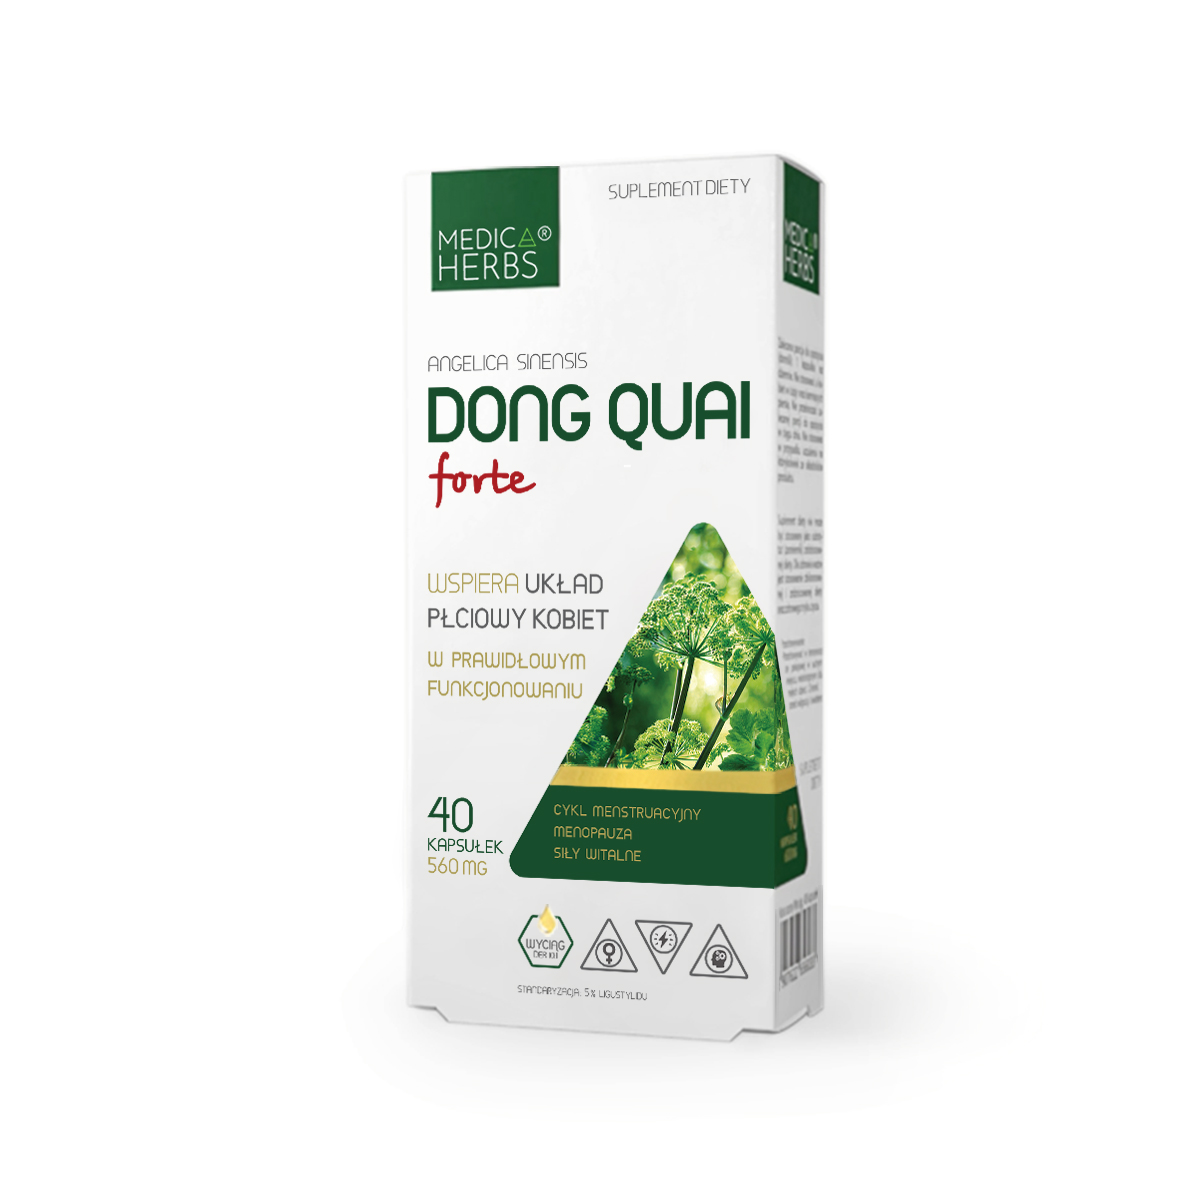 Brak Medica Herbs Dong Quai (Dzięgiel chiński) 5907622656781